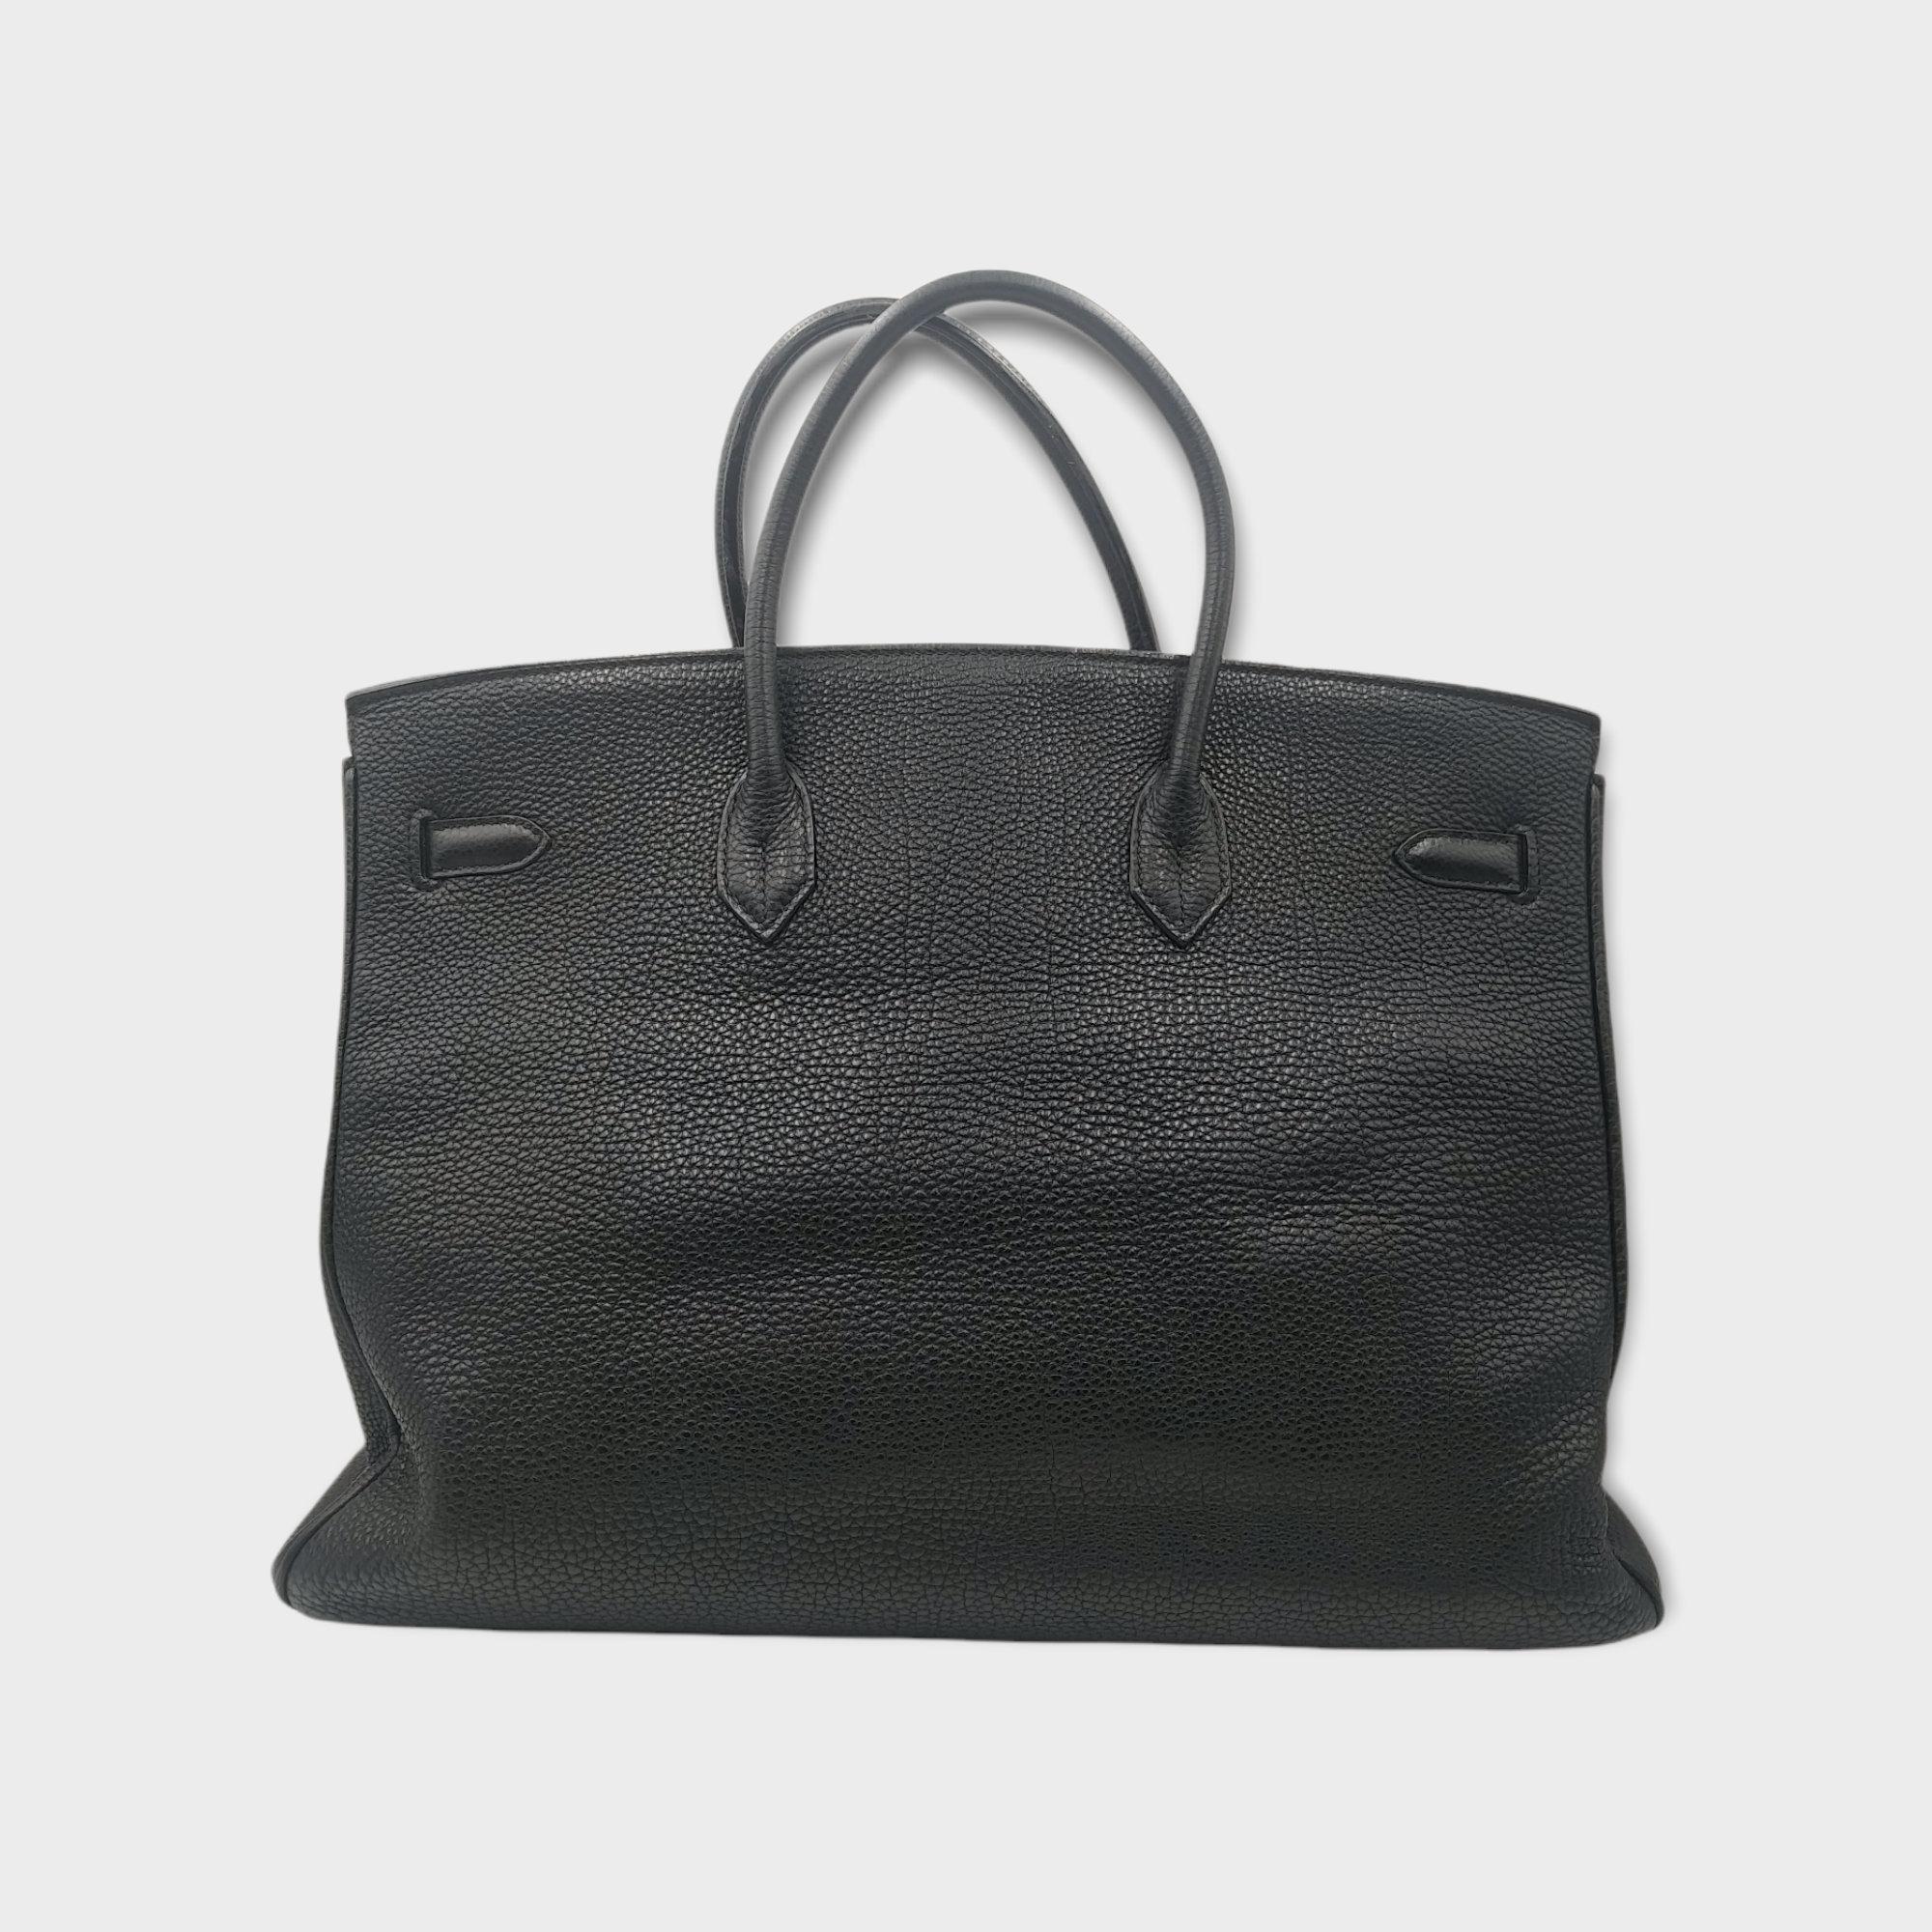 Hermès 40 cm Black Togo Leather Palladium Plated Birkin Bag 3